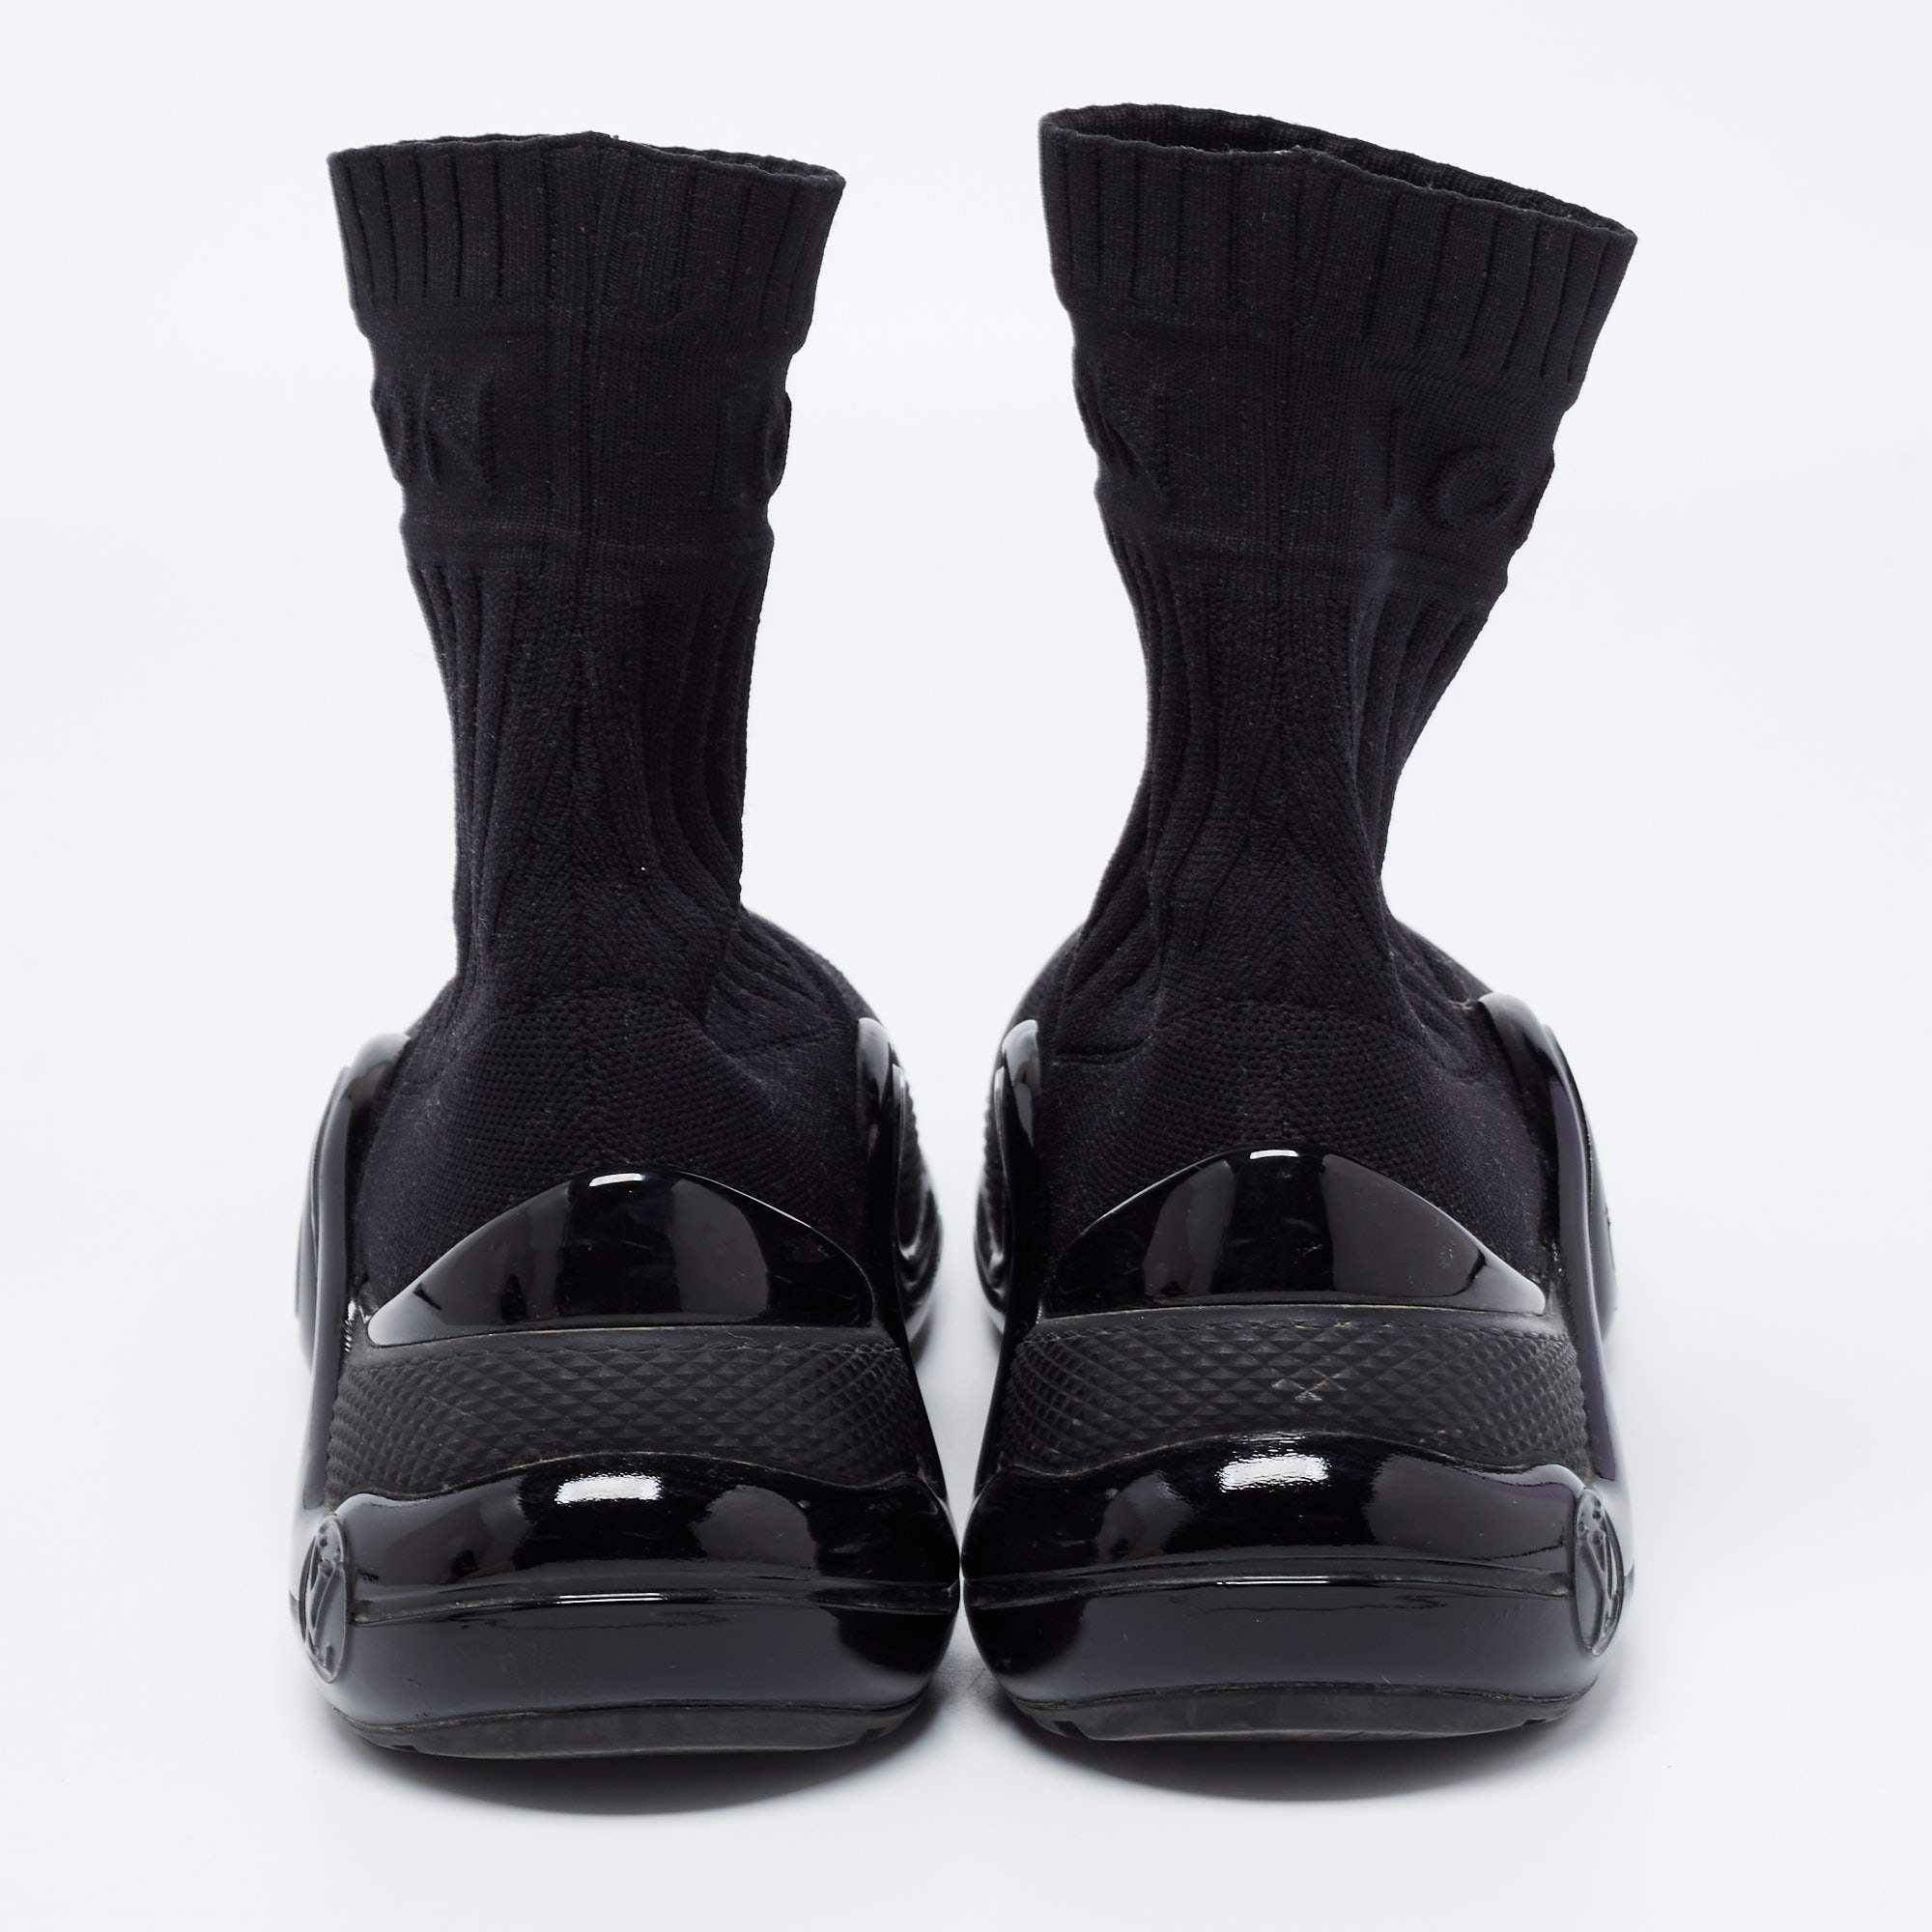 LOUIS VUITTON Stretch Fabric LV Black Heart Sock Sneaker 36.5